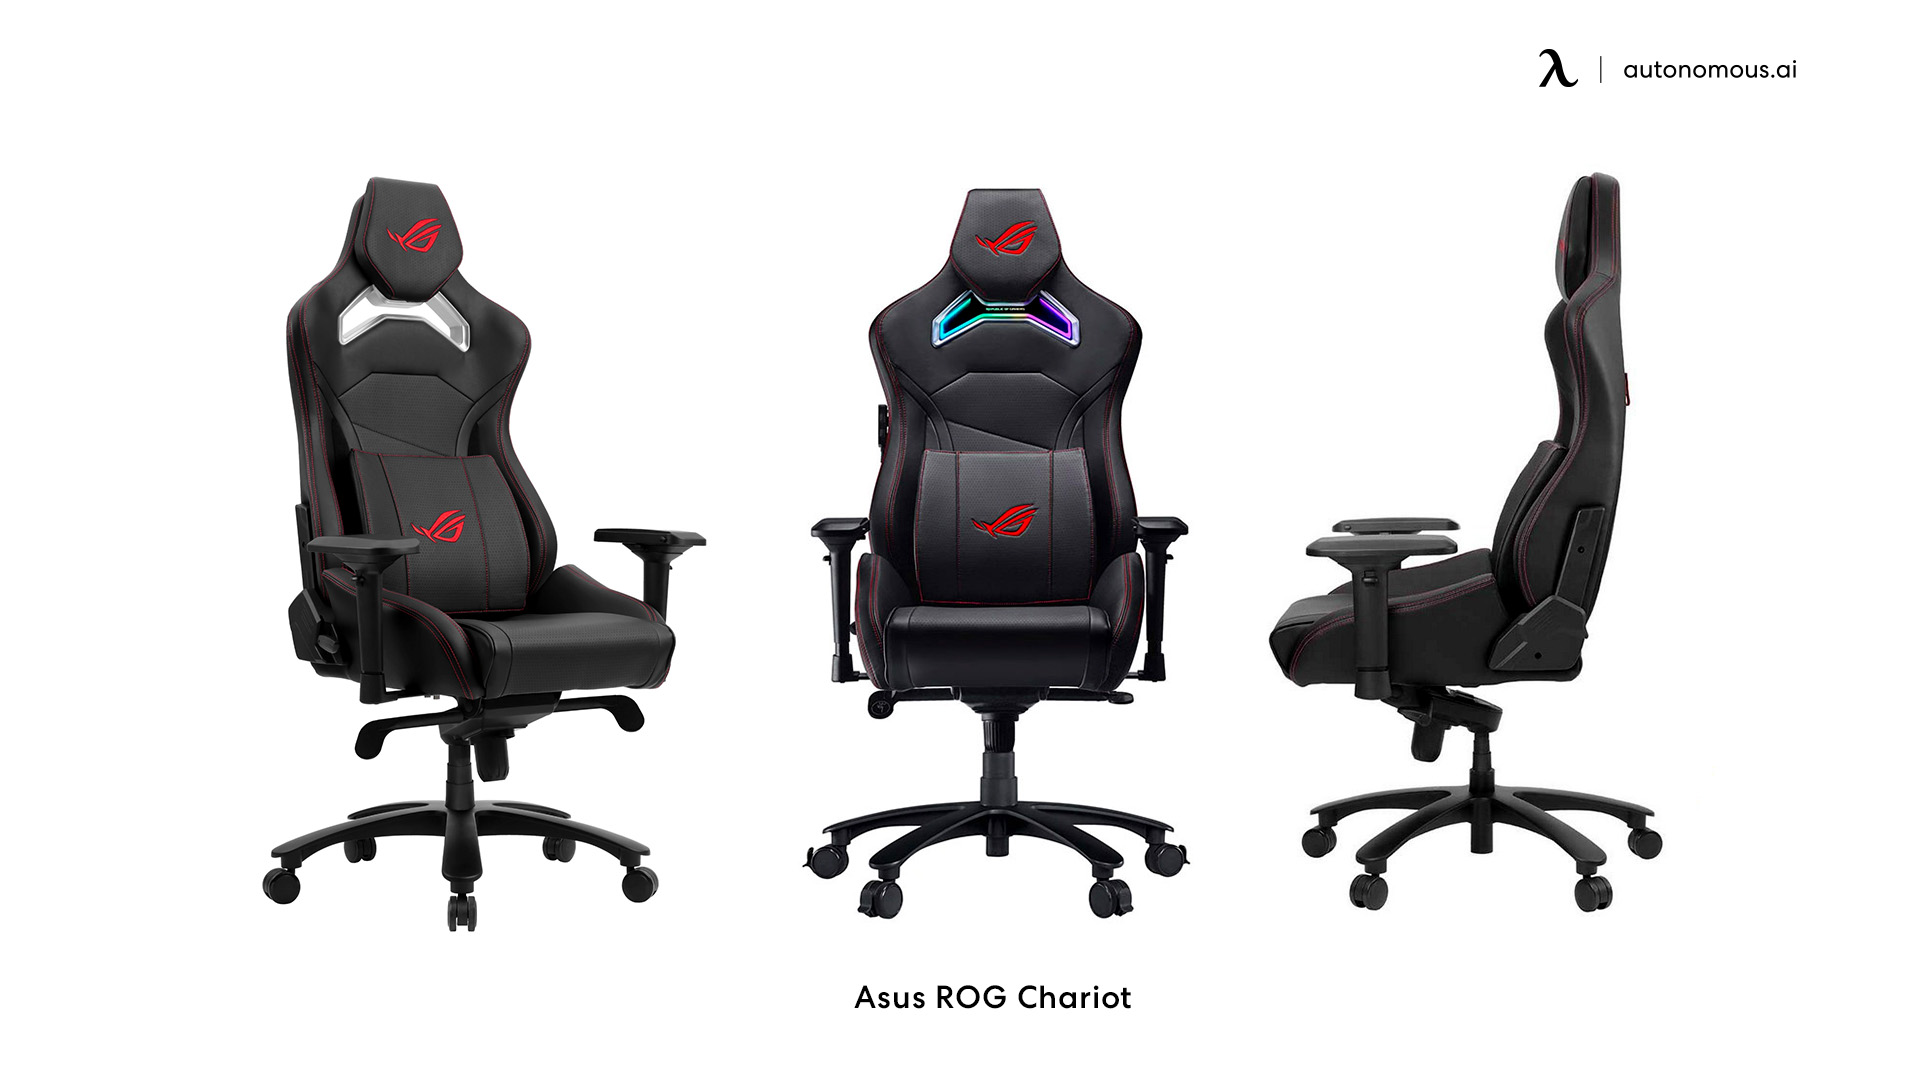 Asus ROG Chariot RGB gaming chair